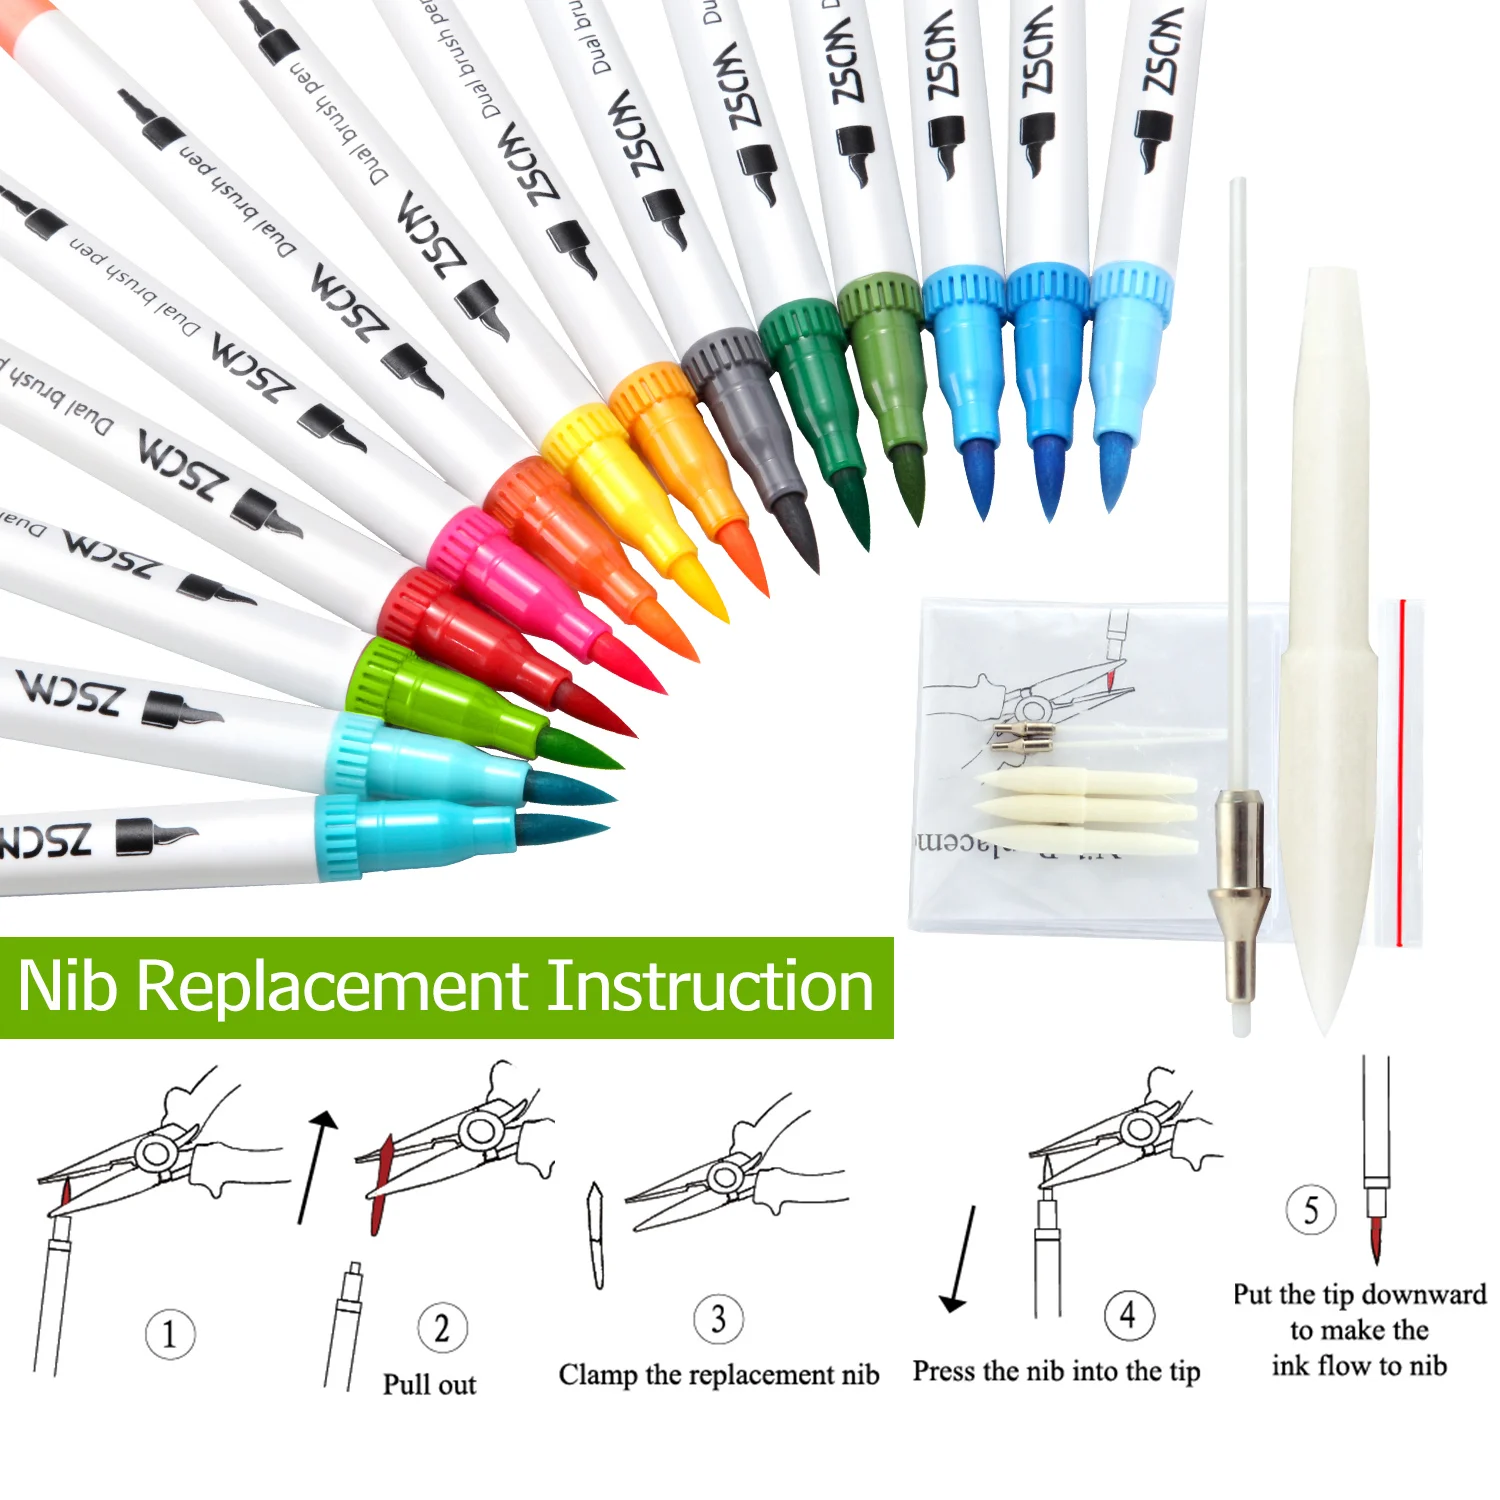 https://ae01.alicdn.com/kf/Ha1b018a153034018b2b11ee20a366be00/100-Colors-Brush-Pens-Markers-Set-Dual-Tips-Fine-Drawing-Adult-Coloring-Books-Sketching-Planner-School.jpg